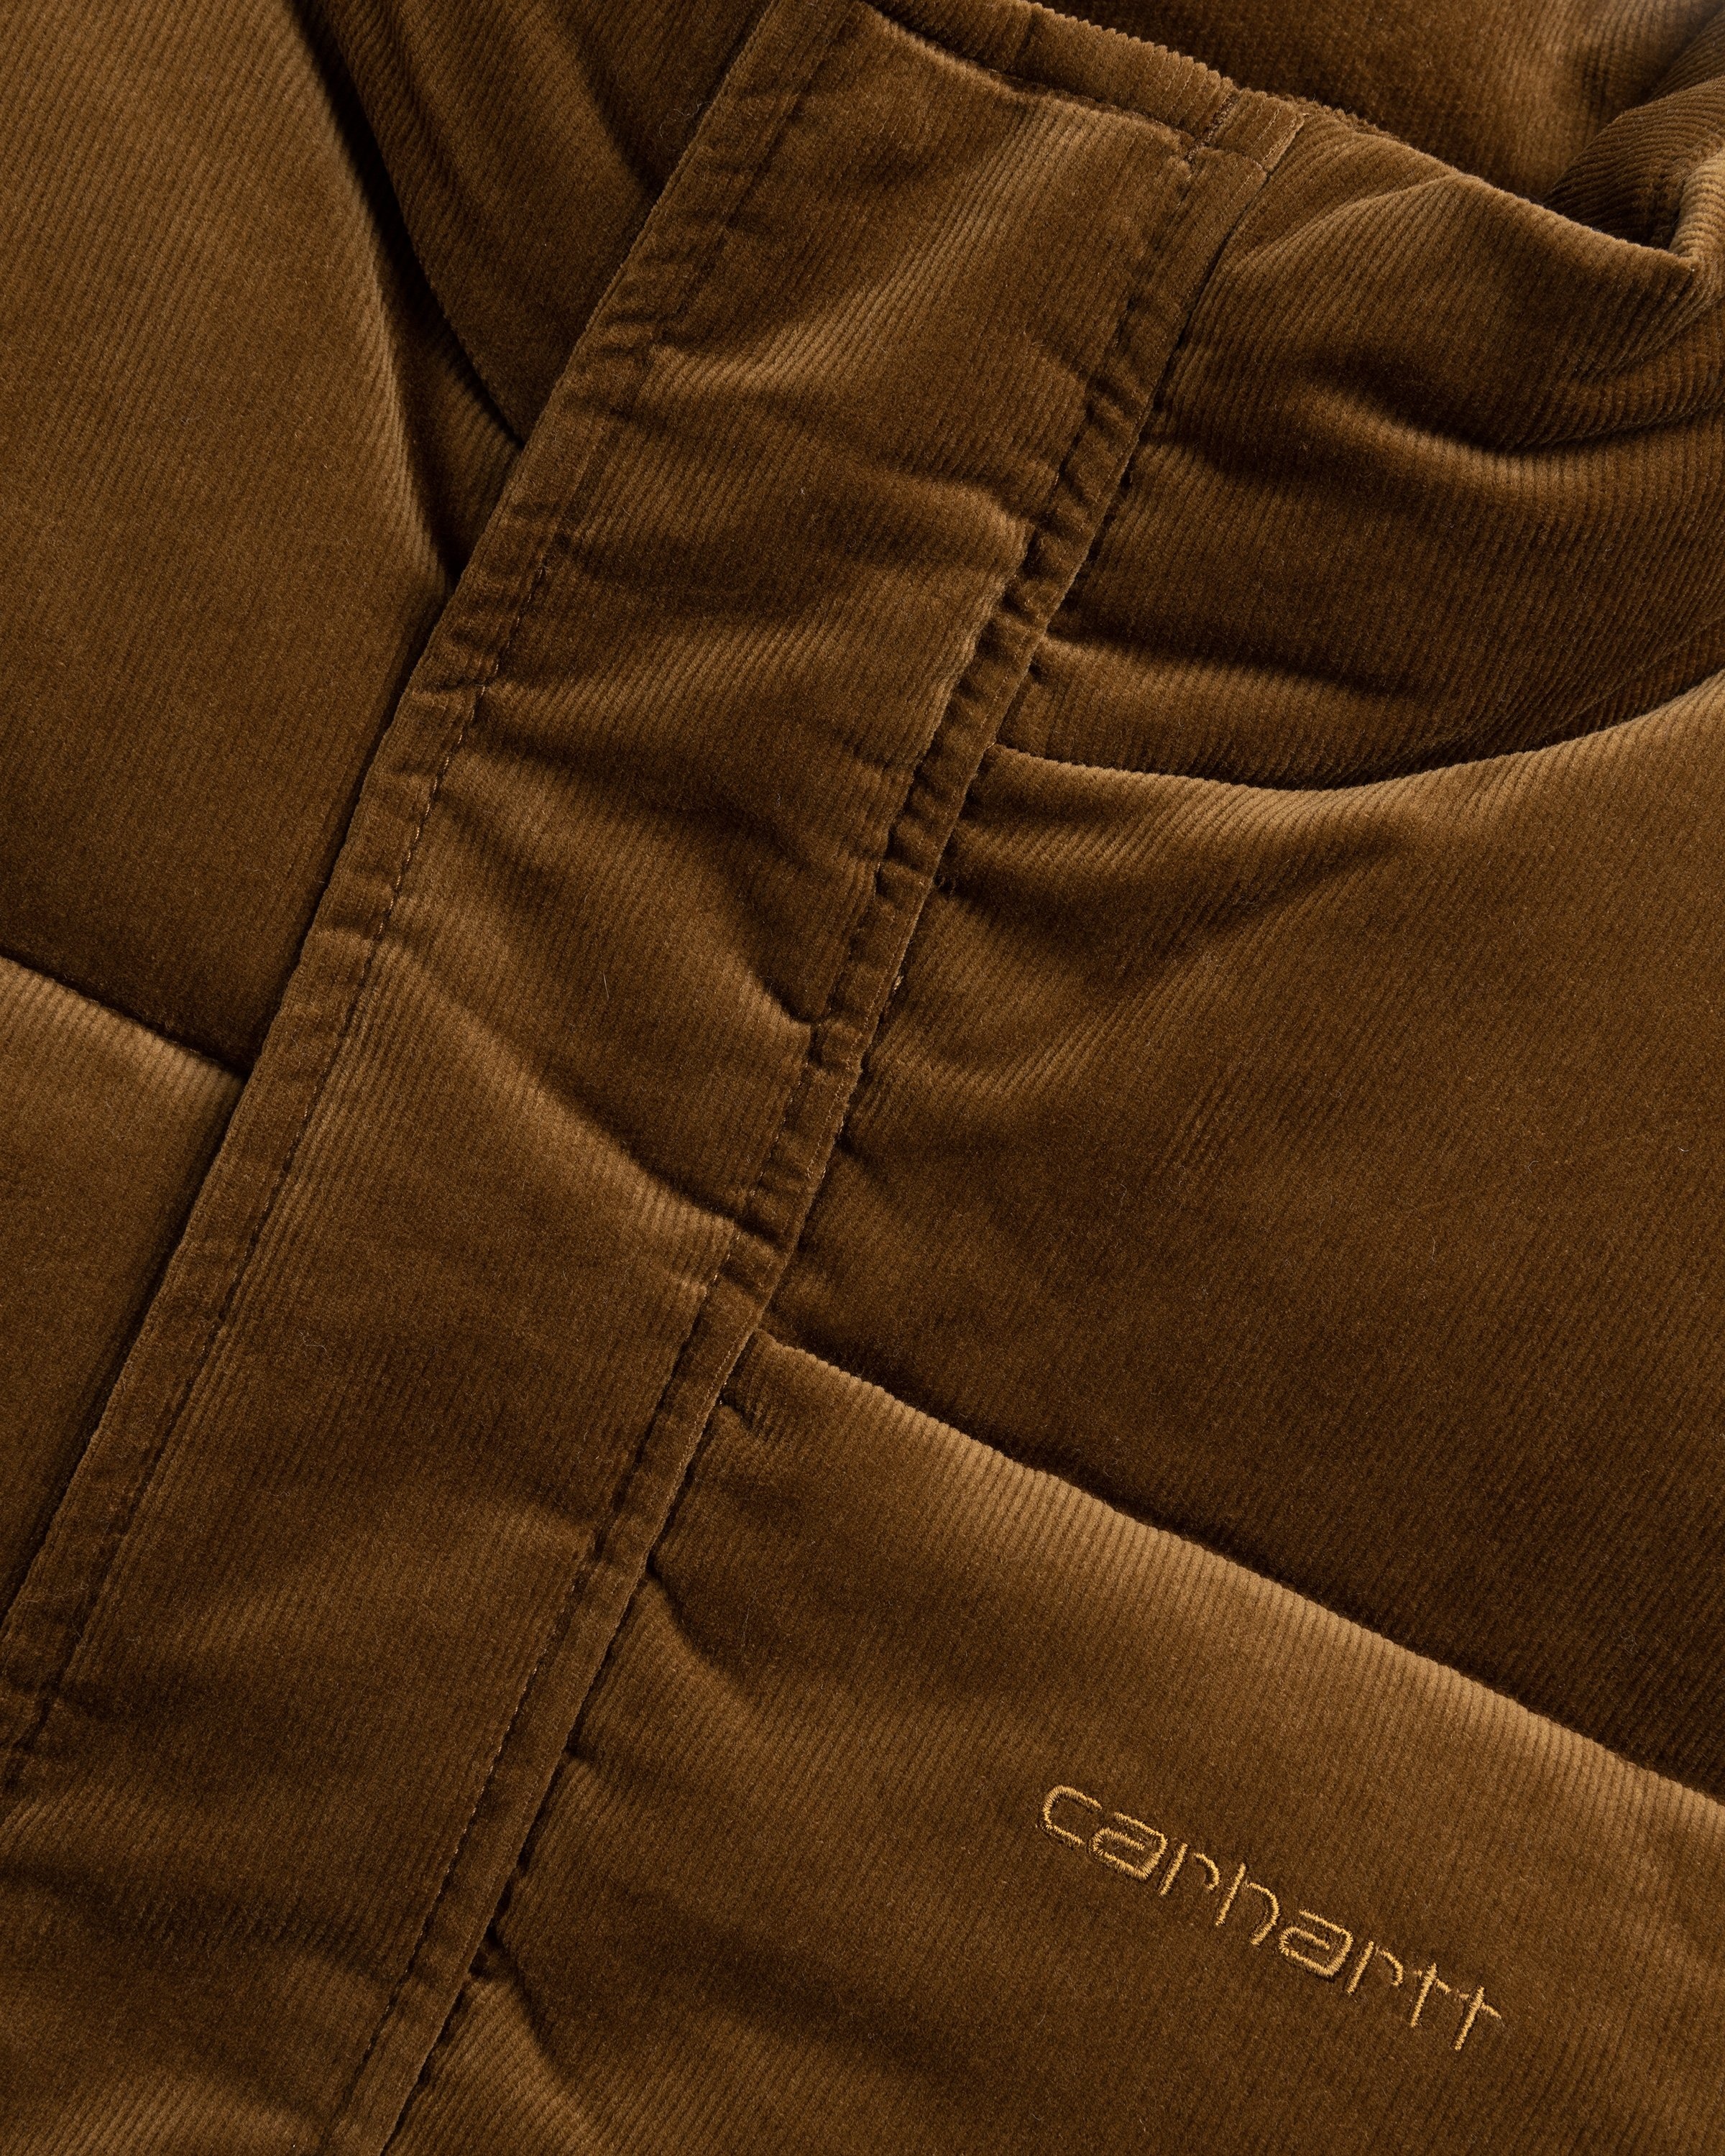 Carhartt WIP – Layton Jacket Deep Hamilton Brown - Outerwear - Brown - Image 6